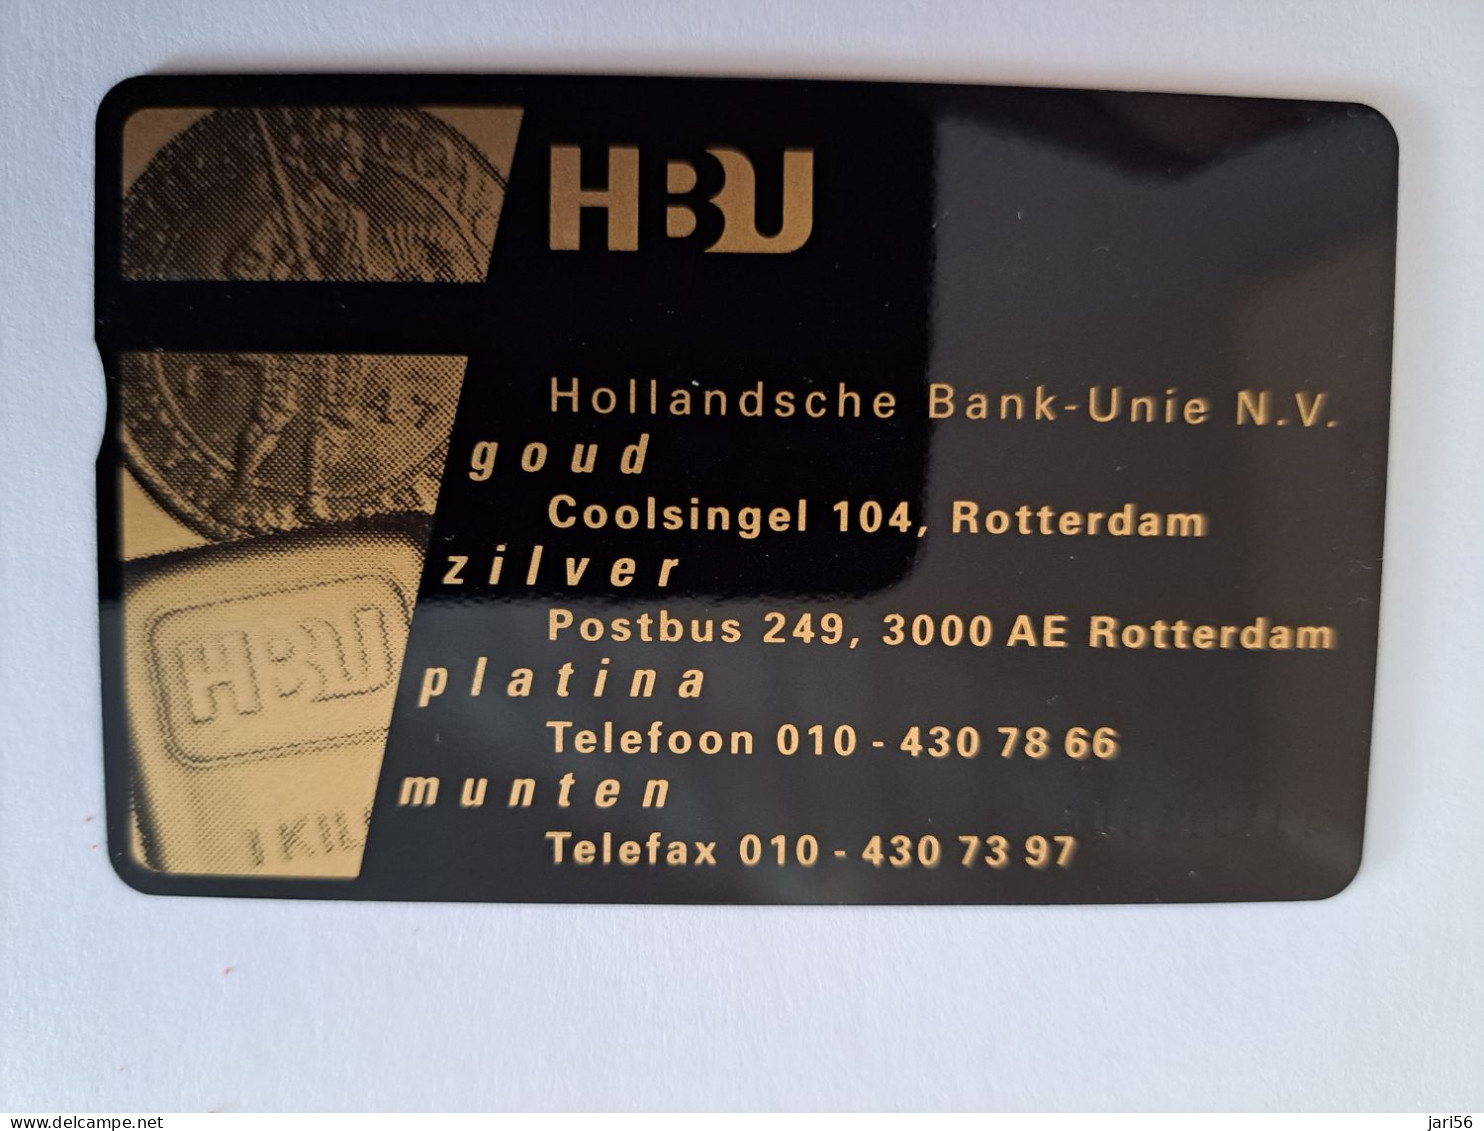 NETHERLANDS  20 UNITS /  L&G /HBU/HOLLANDSE BANK UNIE    /RDZ 120 /MINT CARD  (RRR)    ** 13985** - [3] Sim Cards, Prepaid & Refills